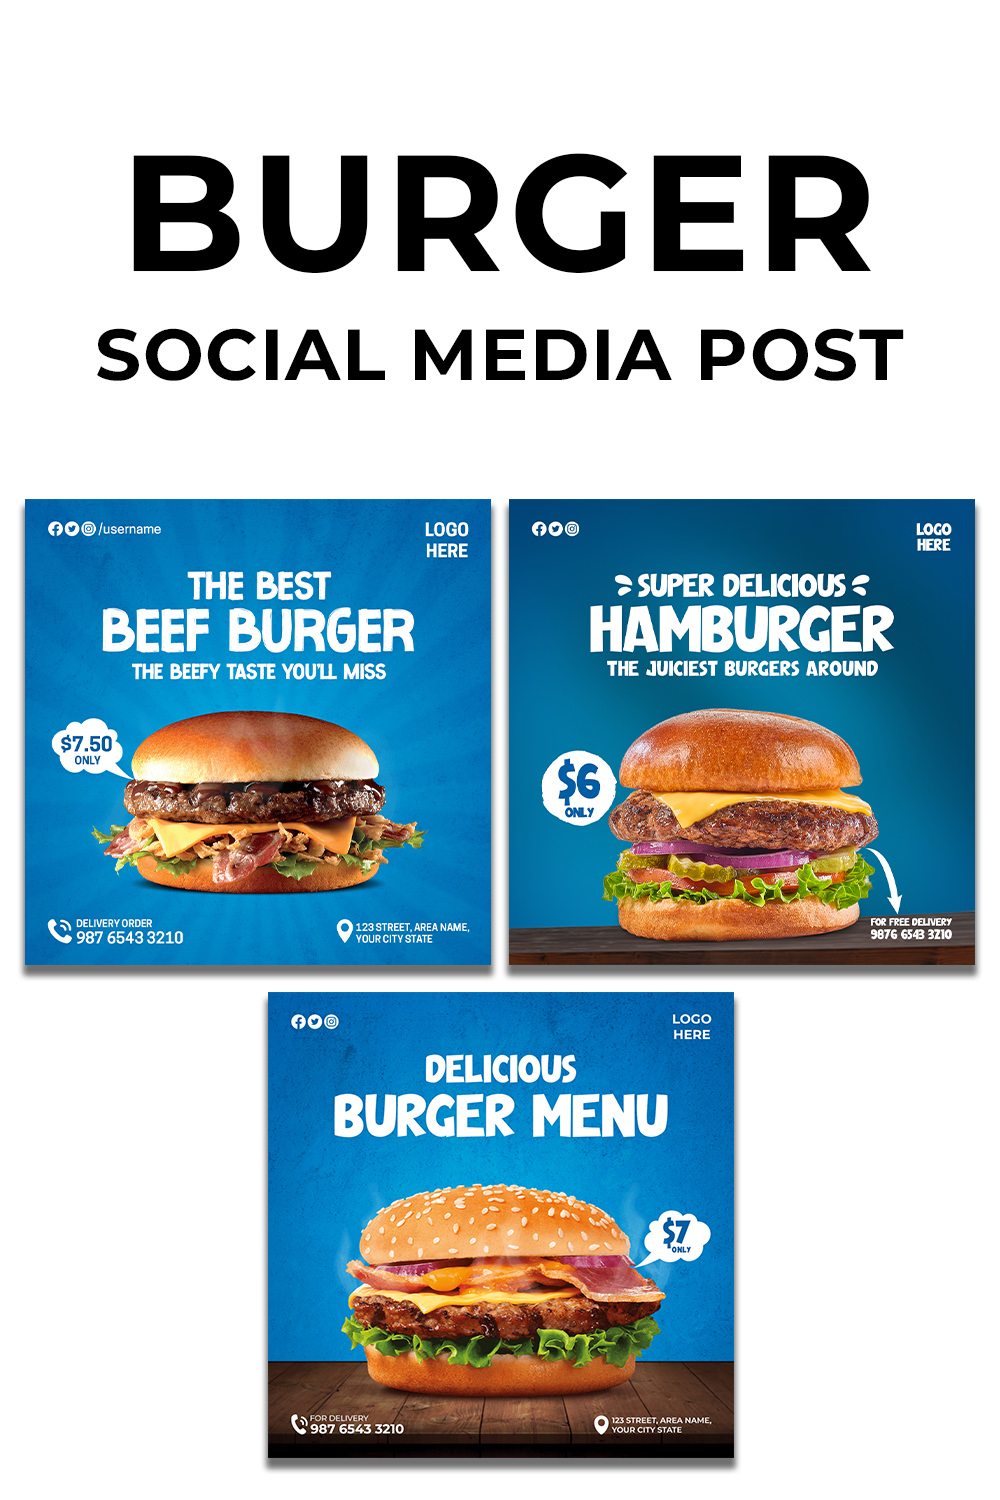 3 Delicious Burger Menu Restaurant Social Media Templates pinterest preview image.